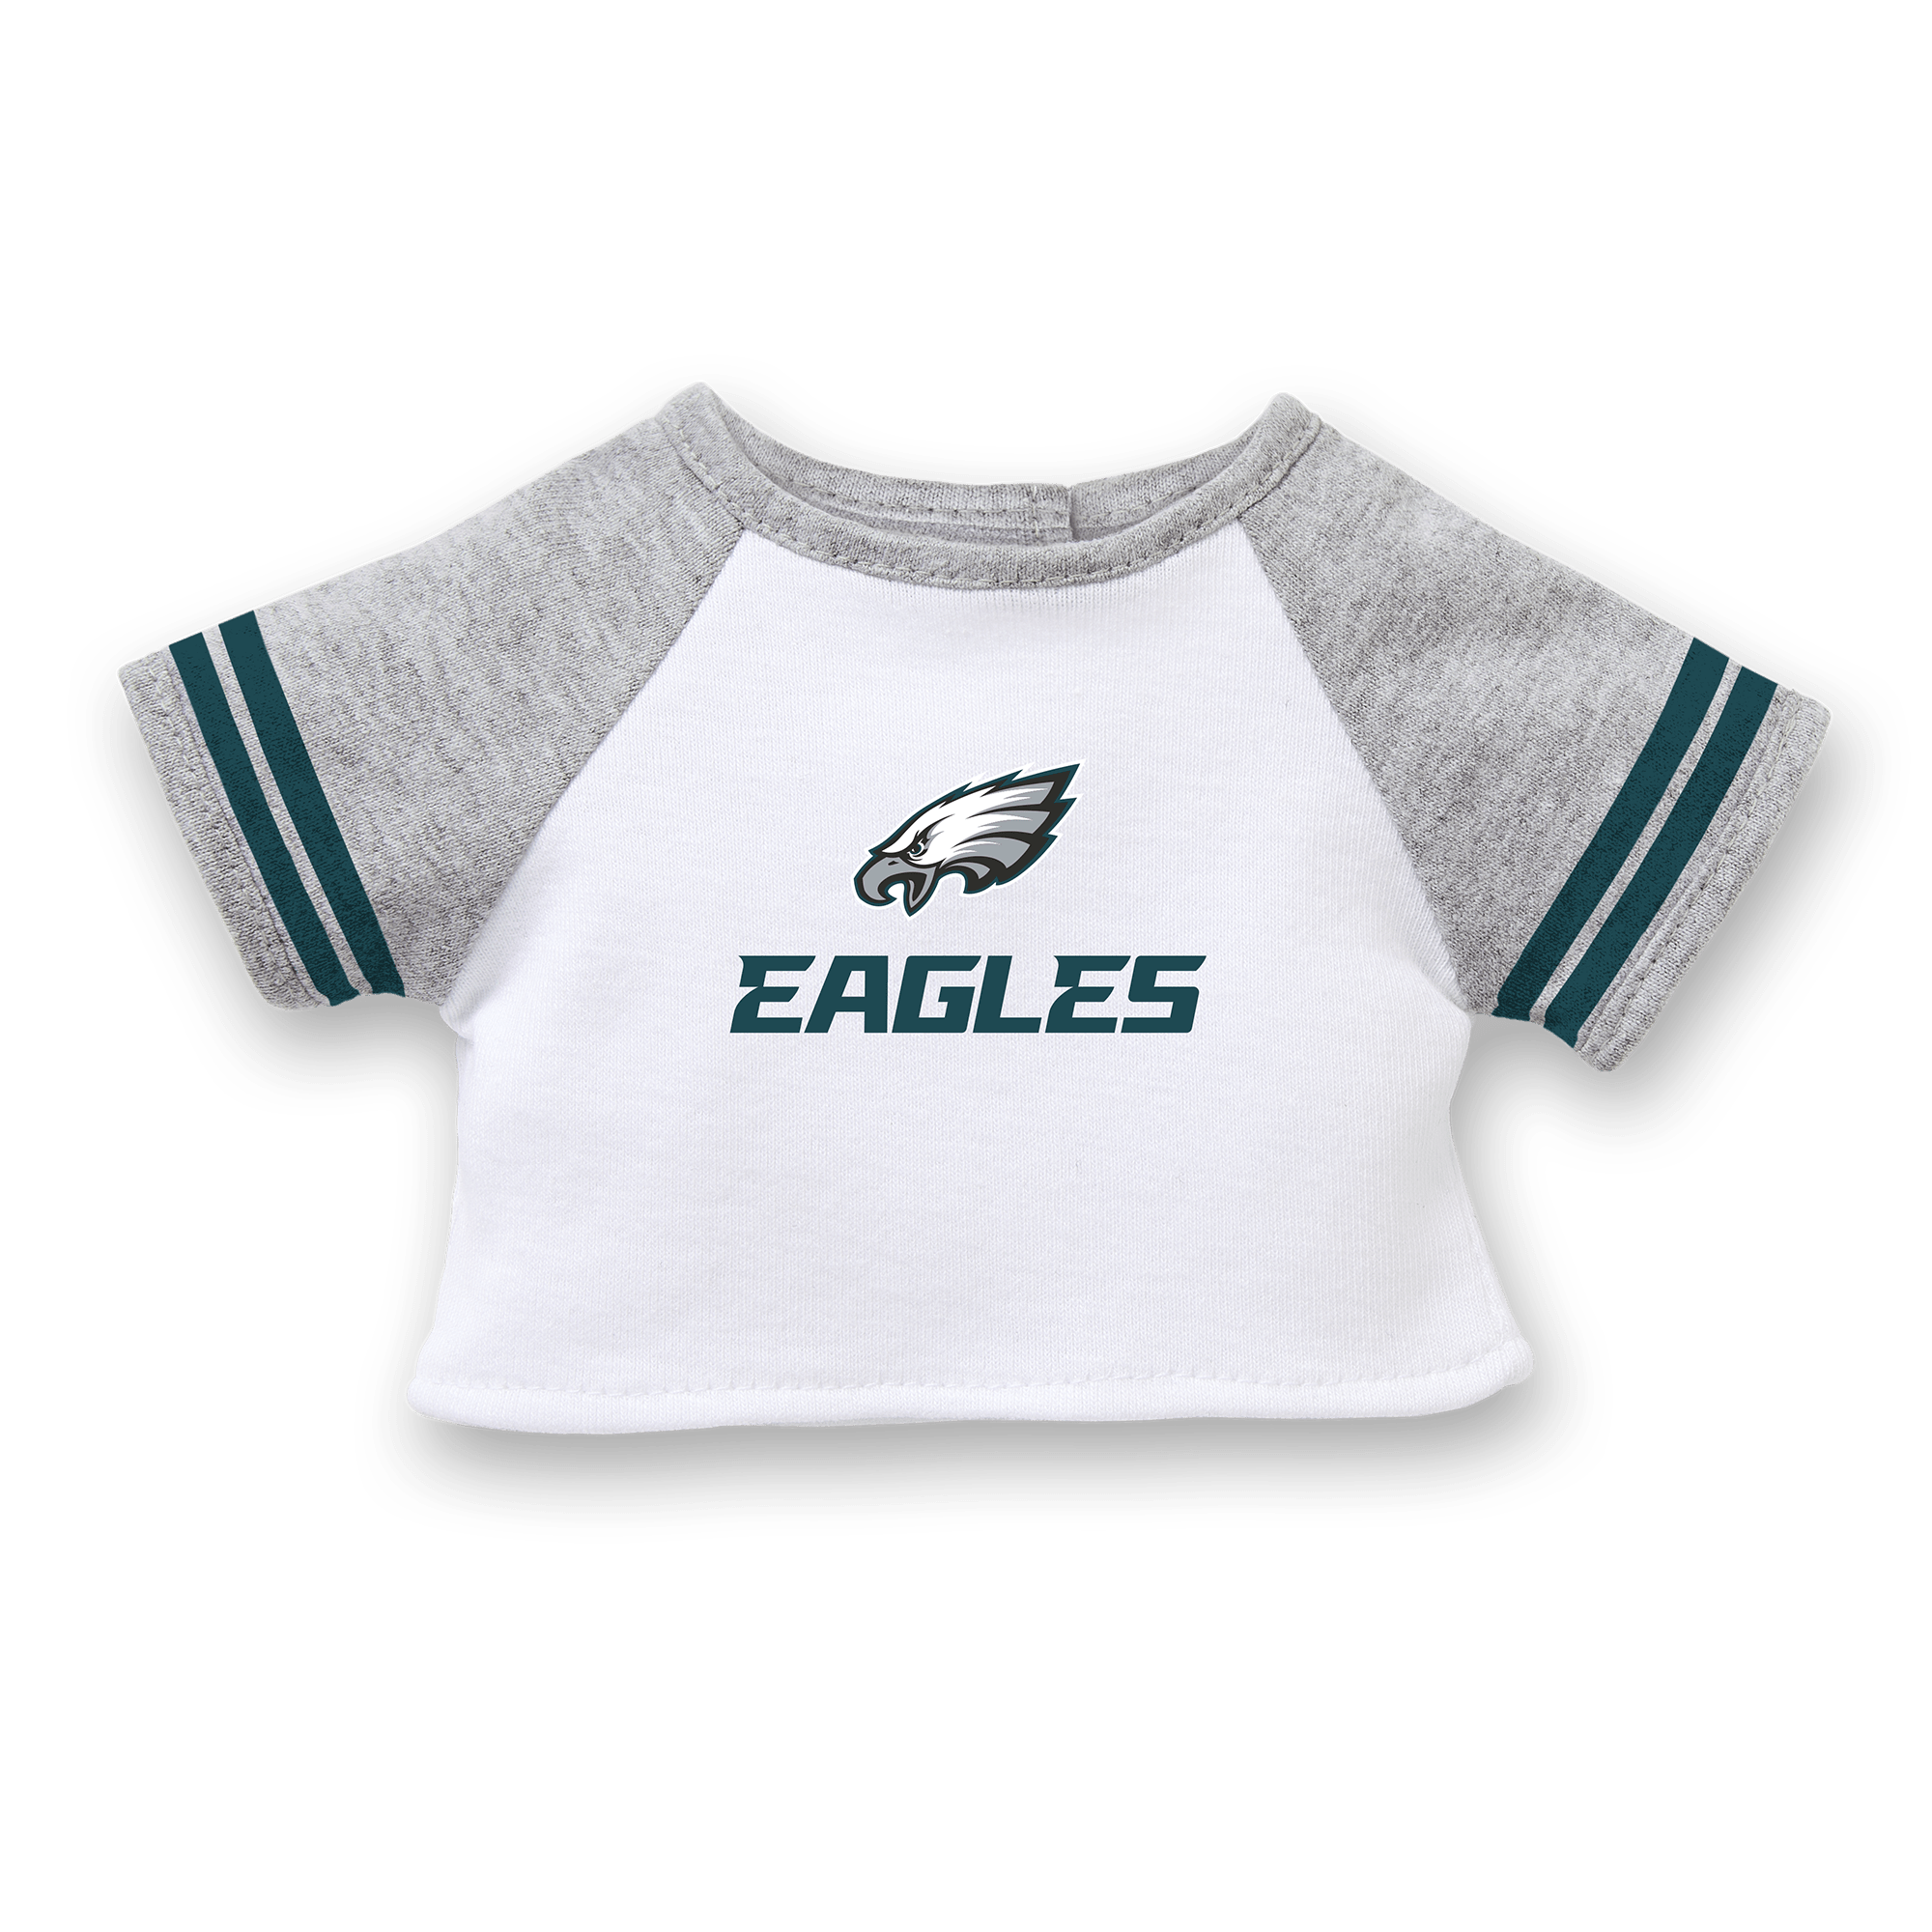 kohl's eagles jersey